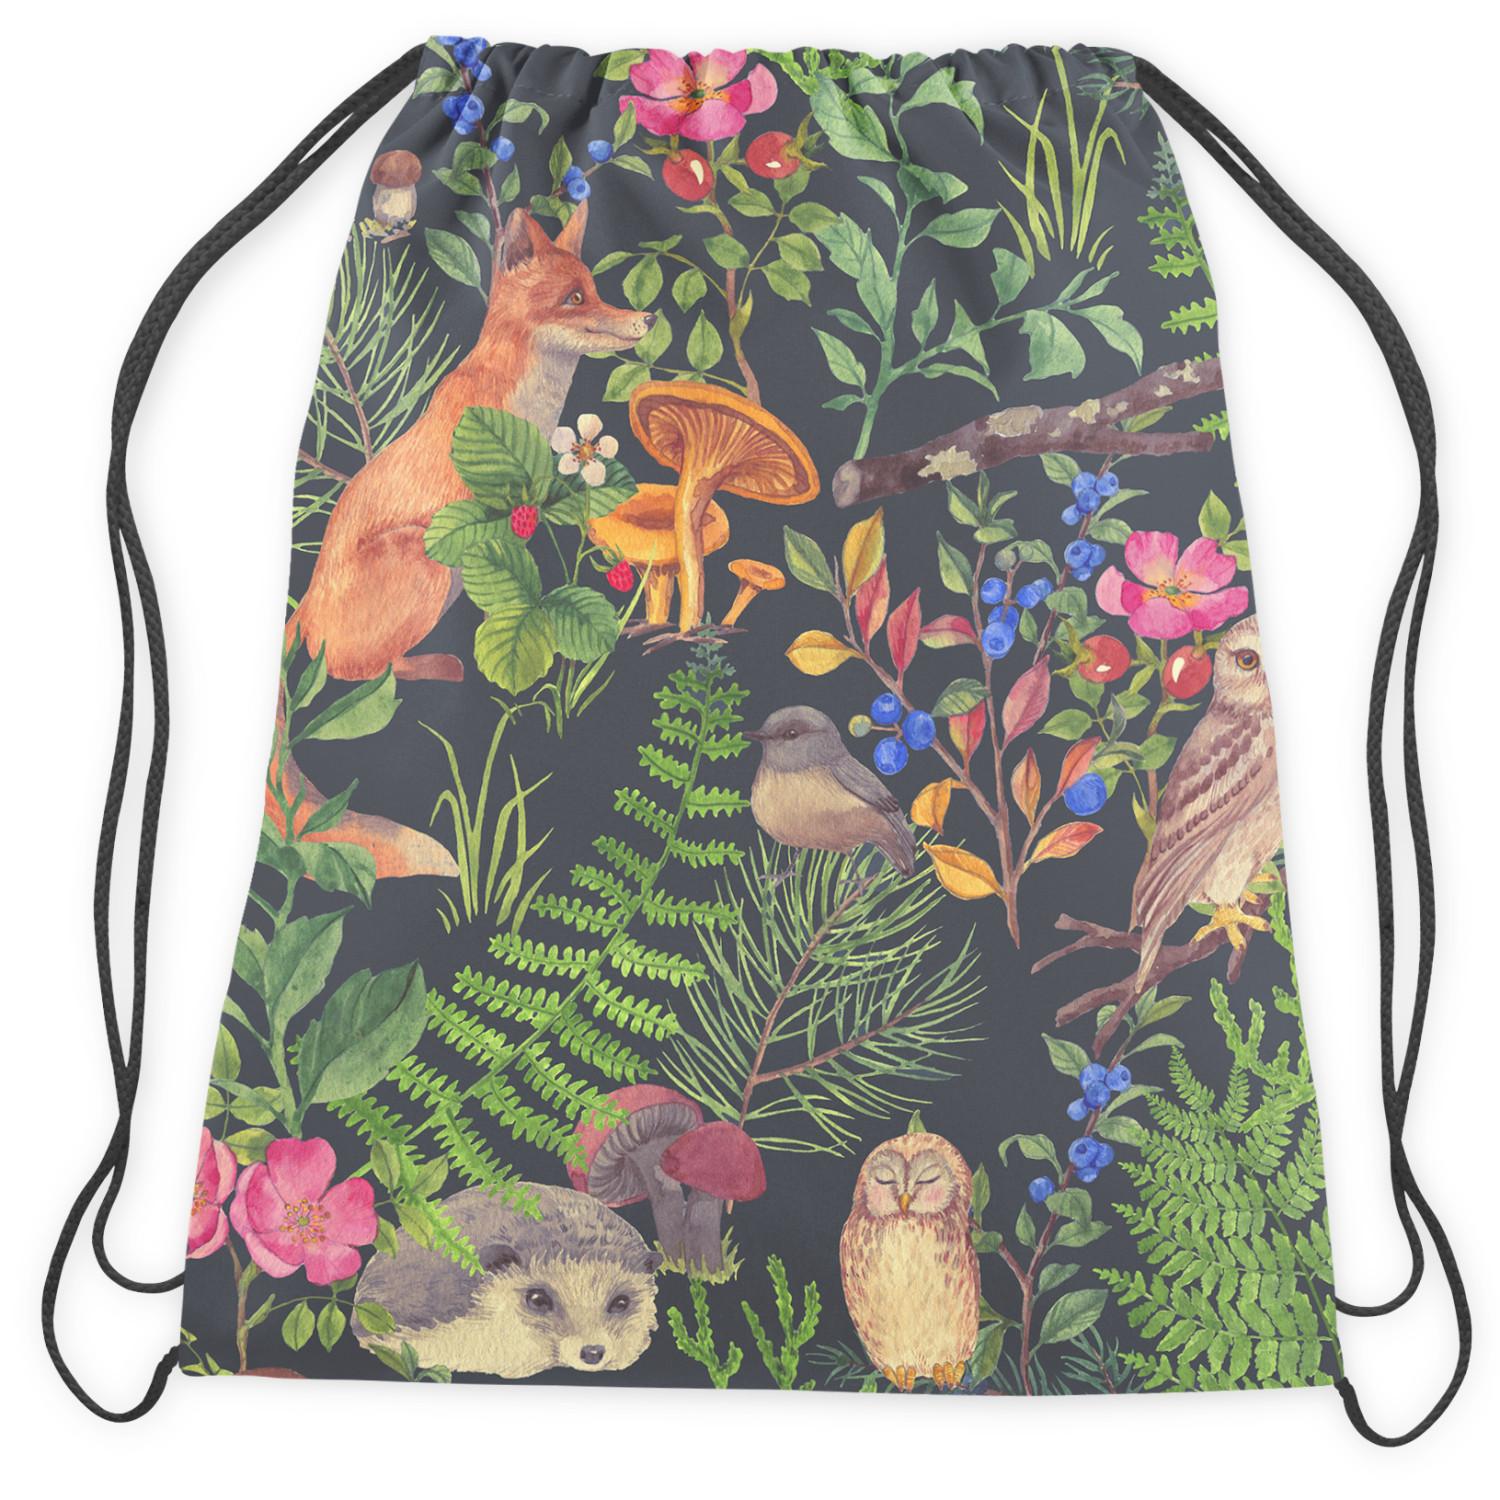 Backpack Good neighbourhood - forest flora and fauna motif on black background